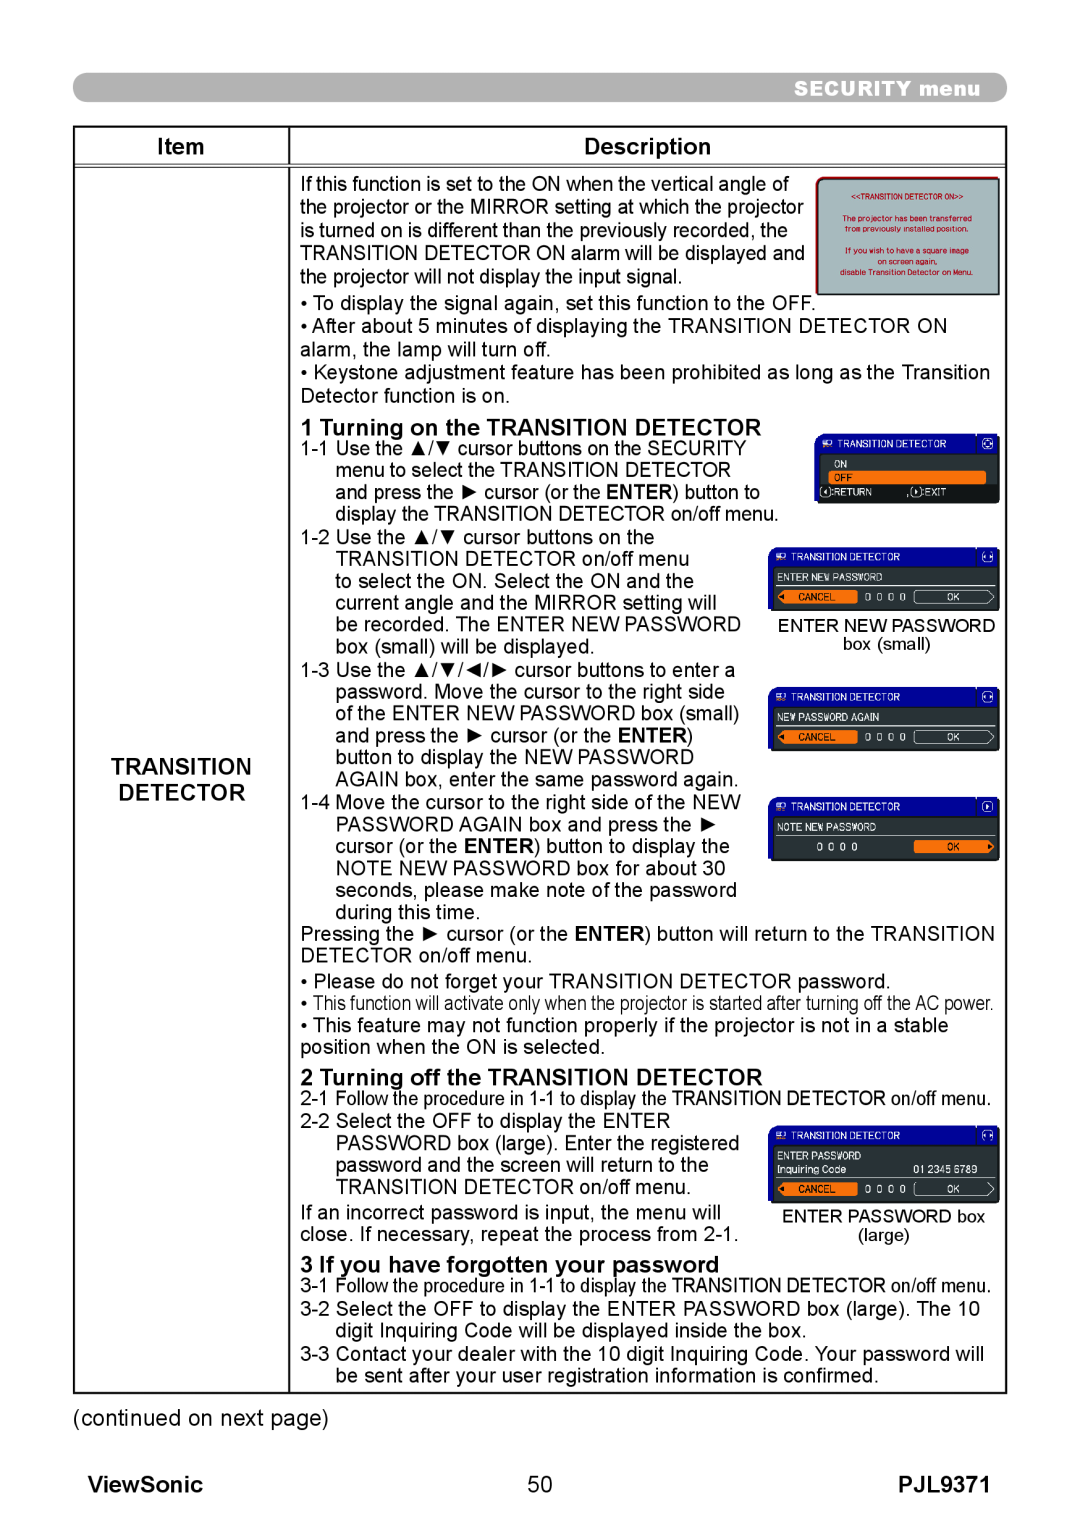 ViewSonic pjl9371 Item, Description, Transition Detector, Turning off the TRANSITION DETECTOR, ViewSonic, SECURITY menu 